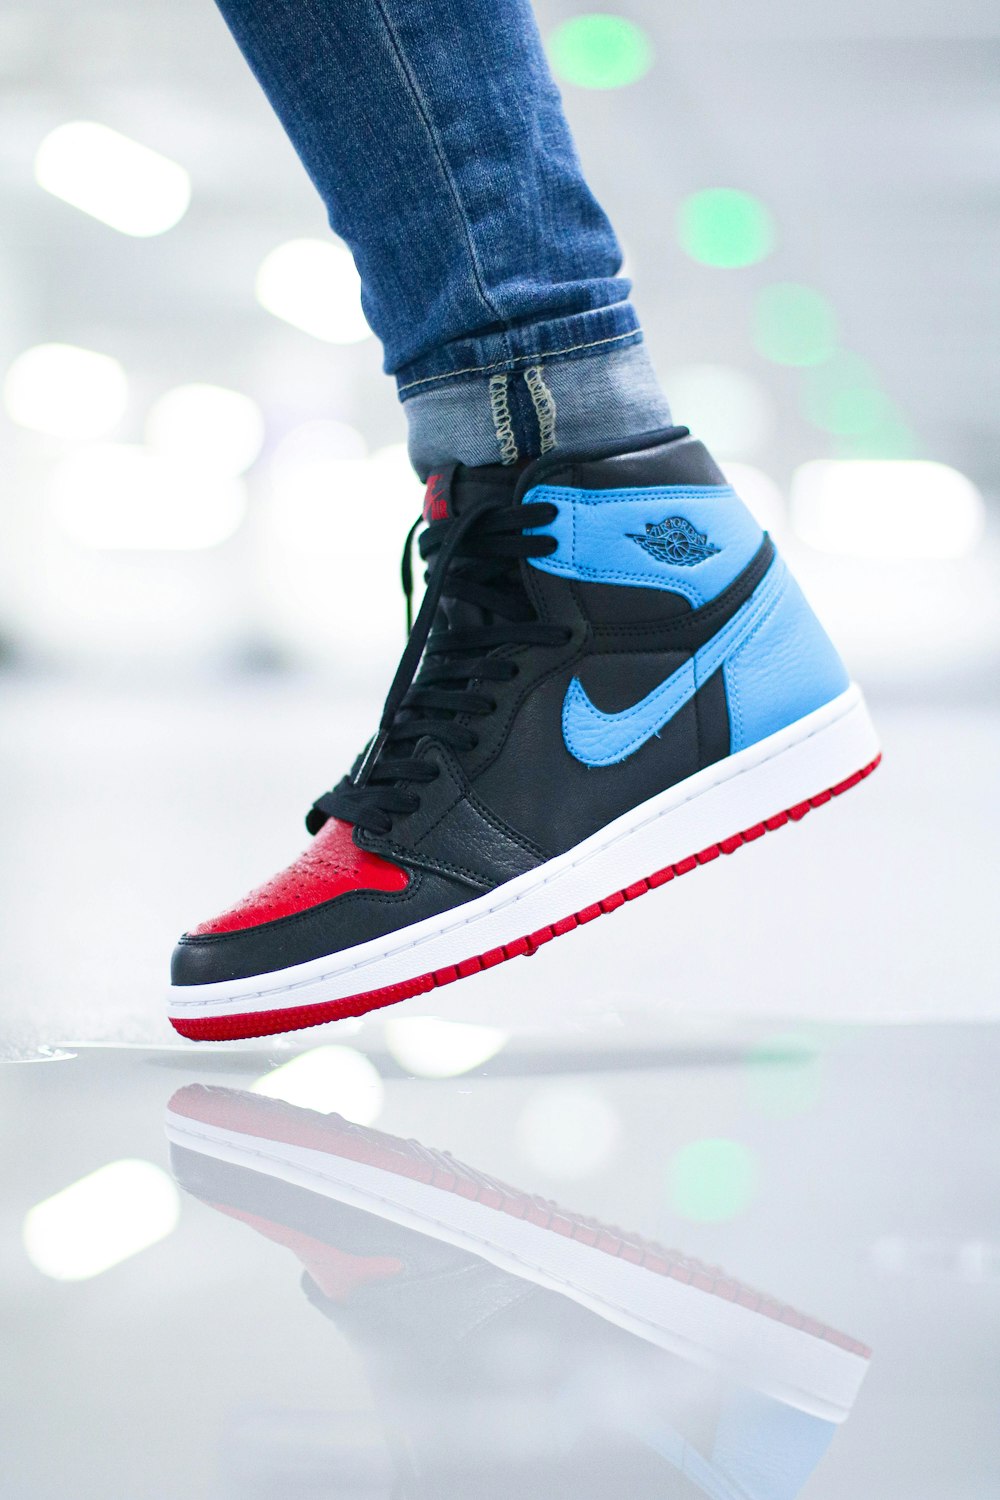 Nike Air Jordan 1 shoes photo – Free Shoe Image on Unsplash